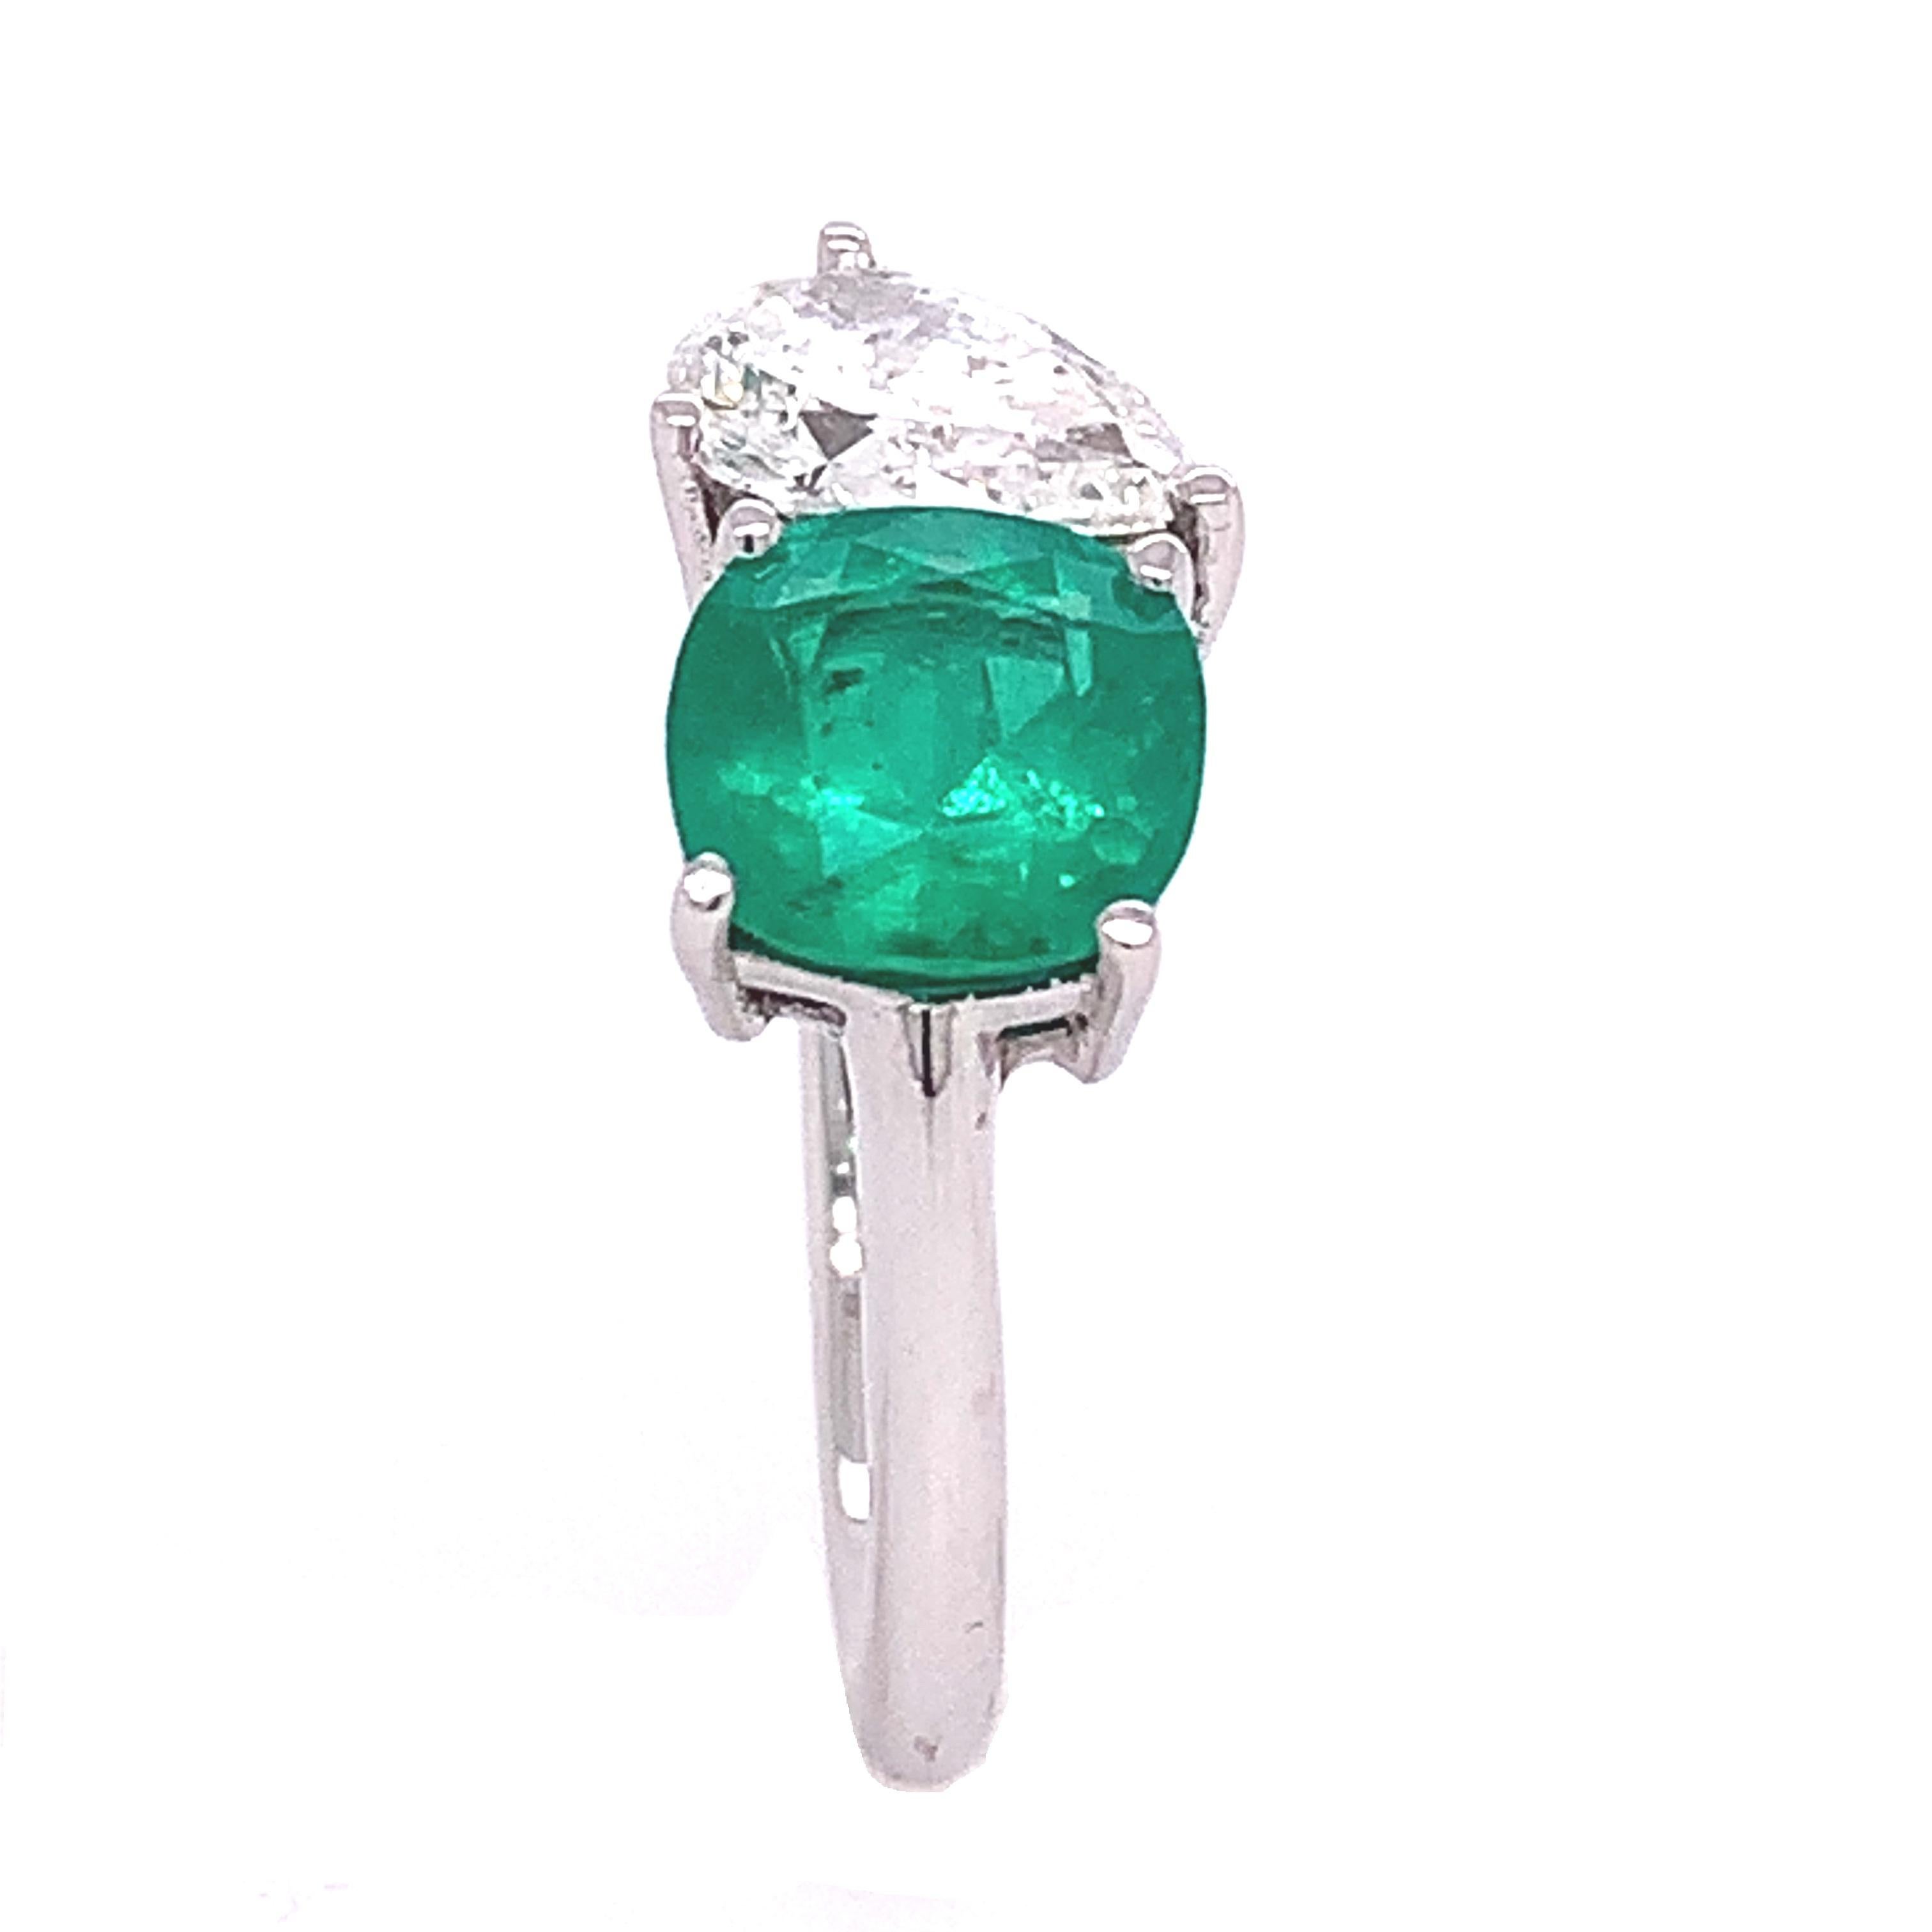 18K White Gold
Emerald: 2.36 carat
Diamond: 1.11 carat